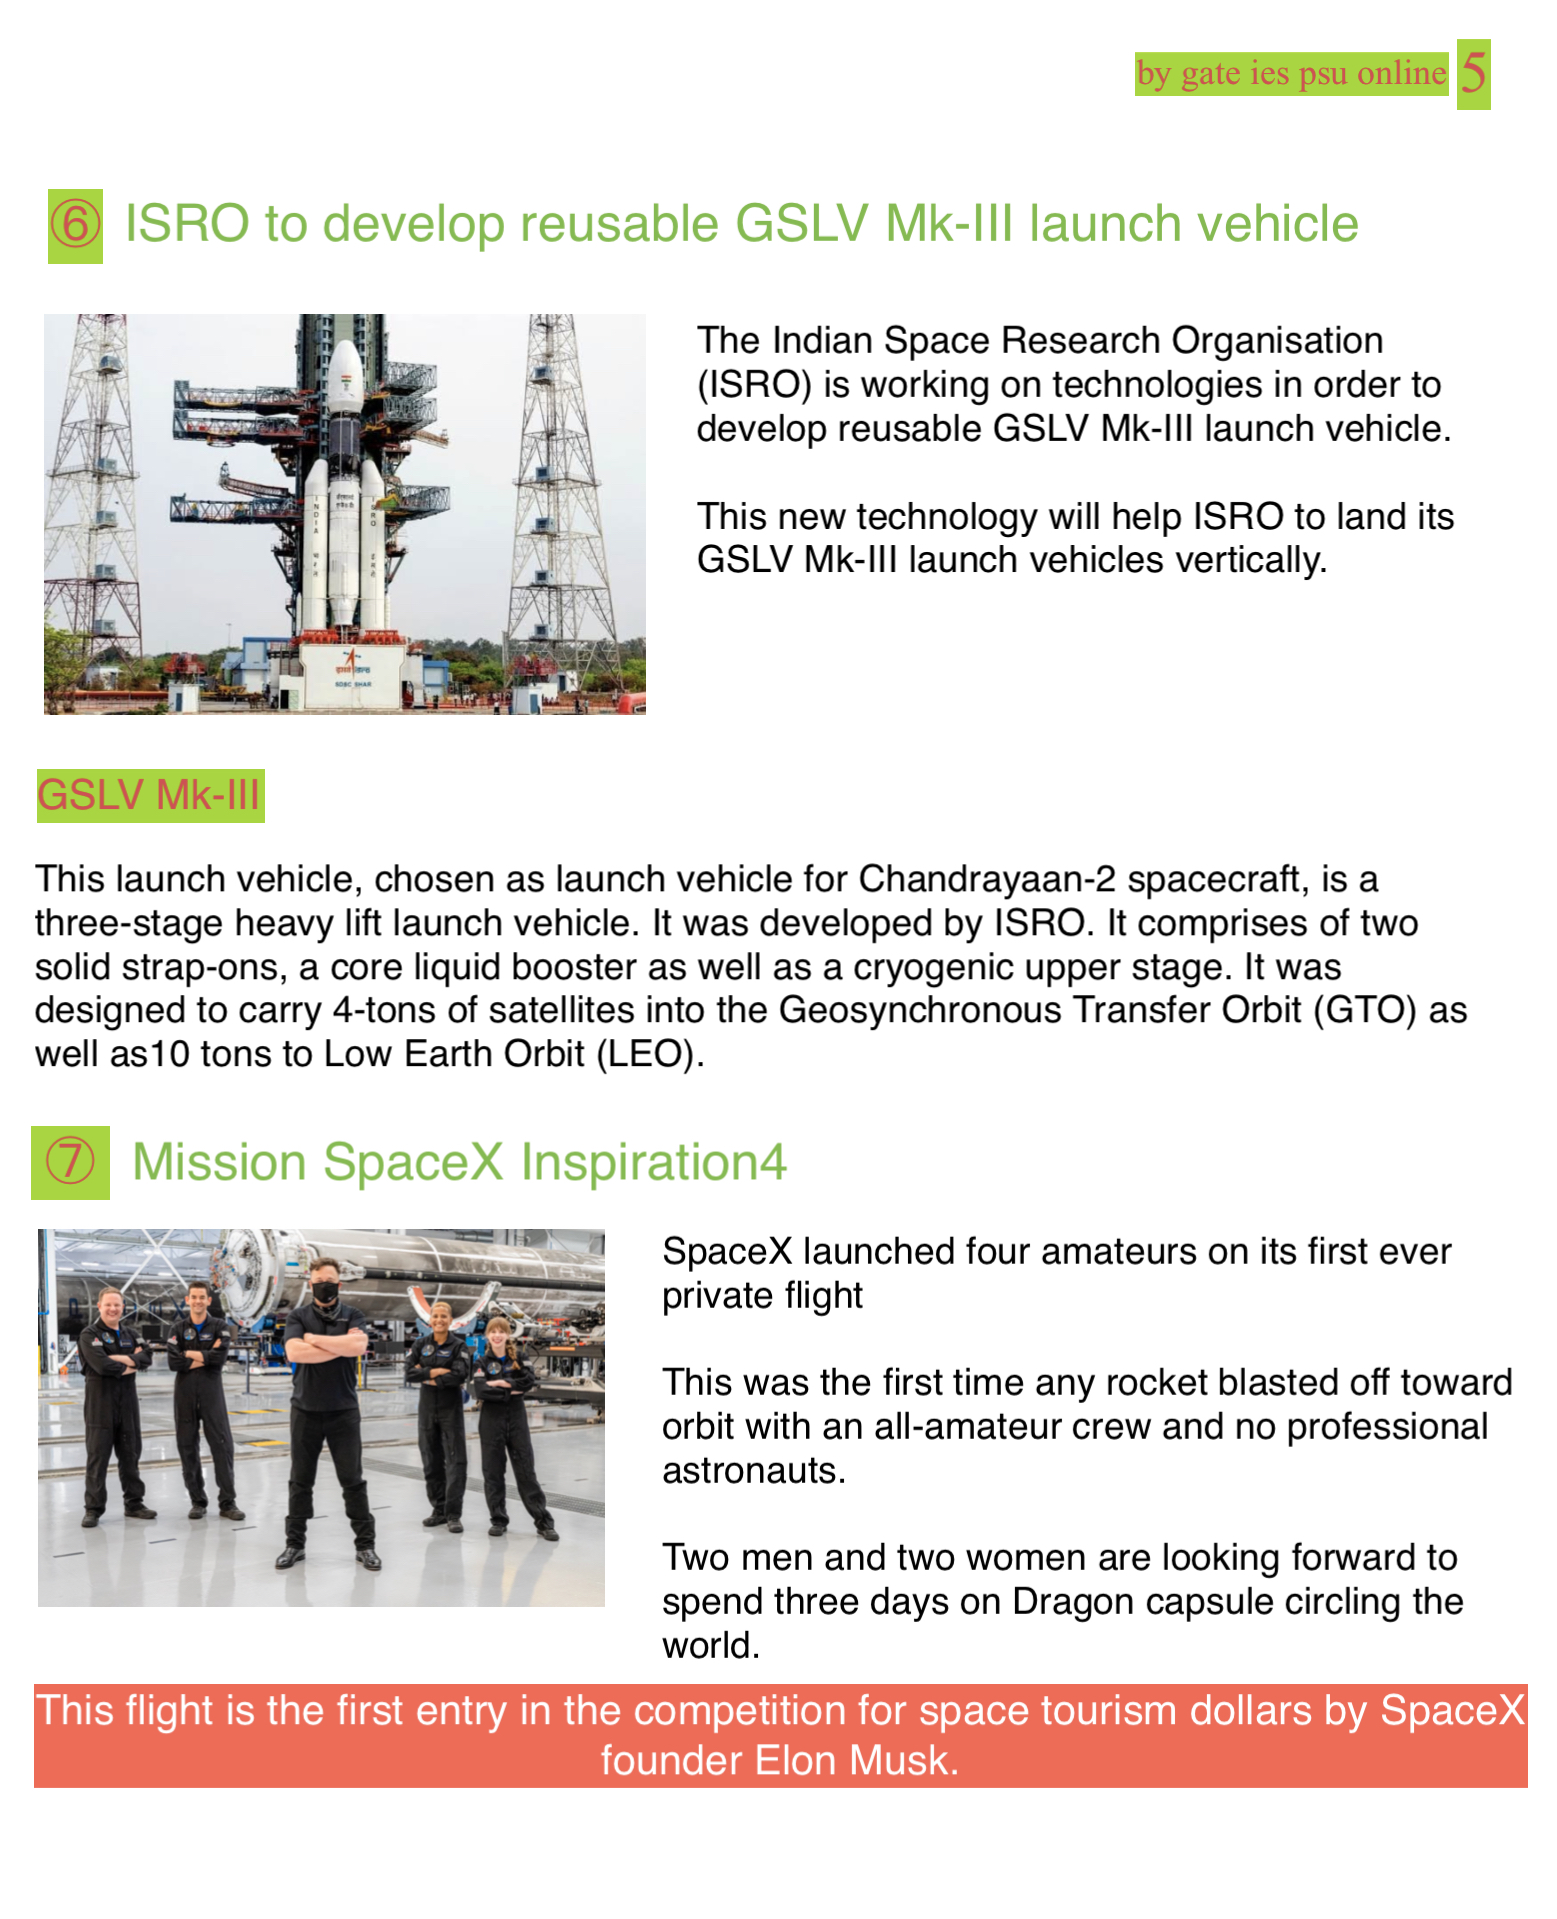 ISRO GSLV MK 3 reusable launch vehicle UPSC IES CURRENT AFFAIRS 